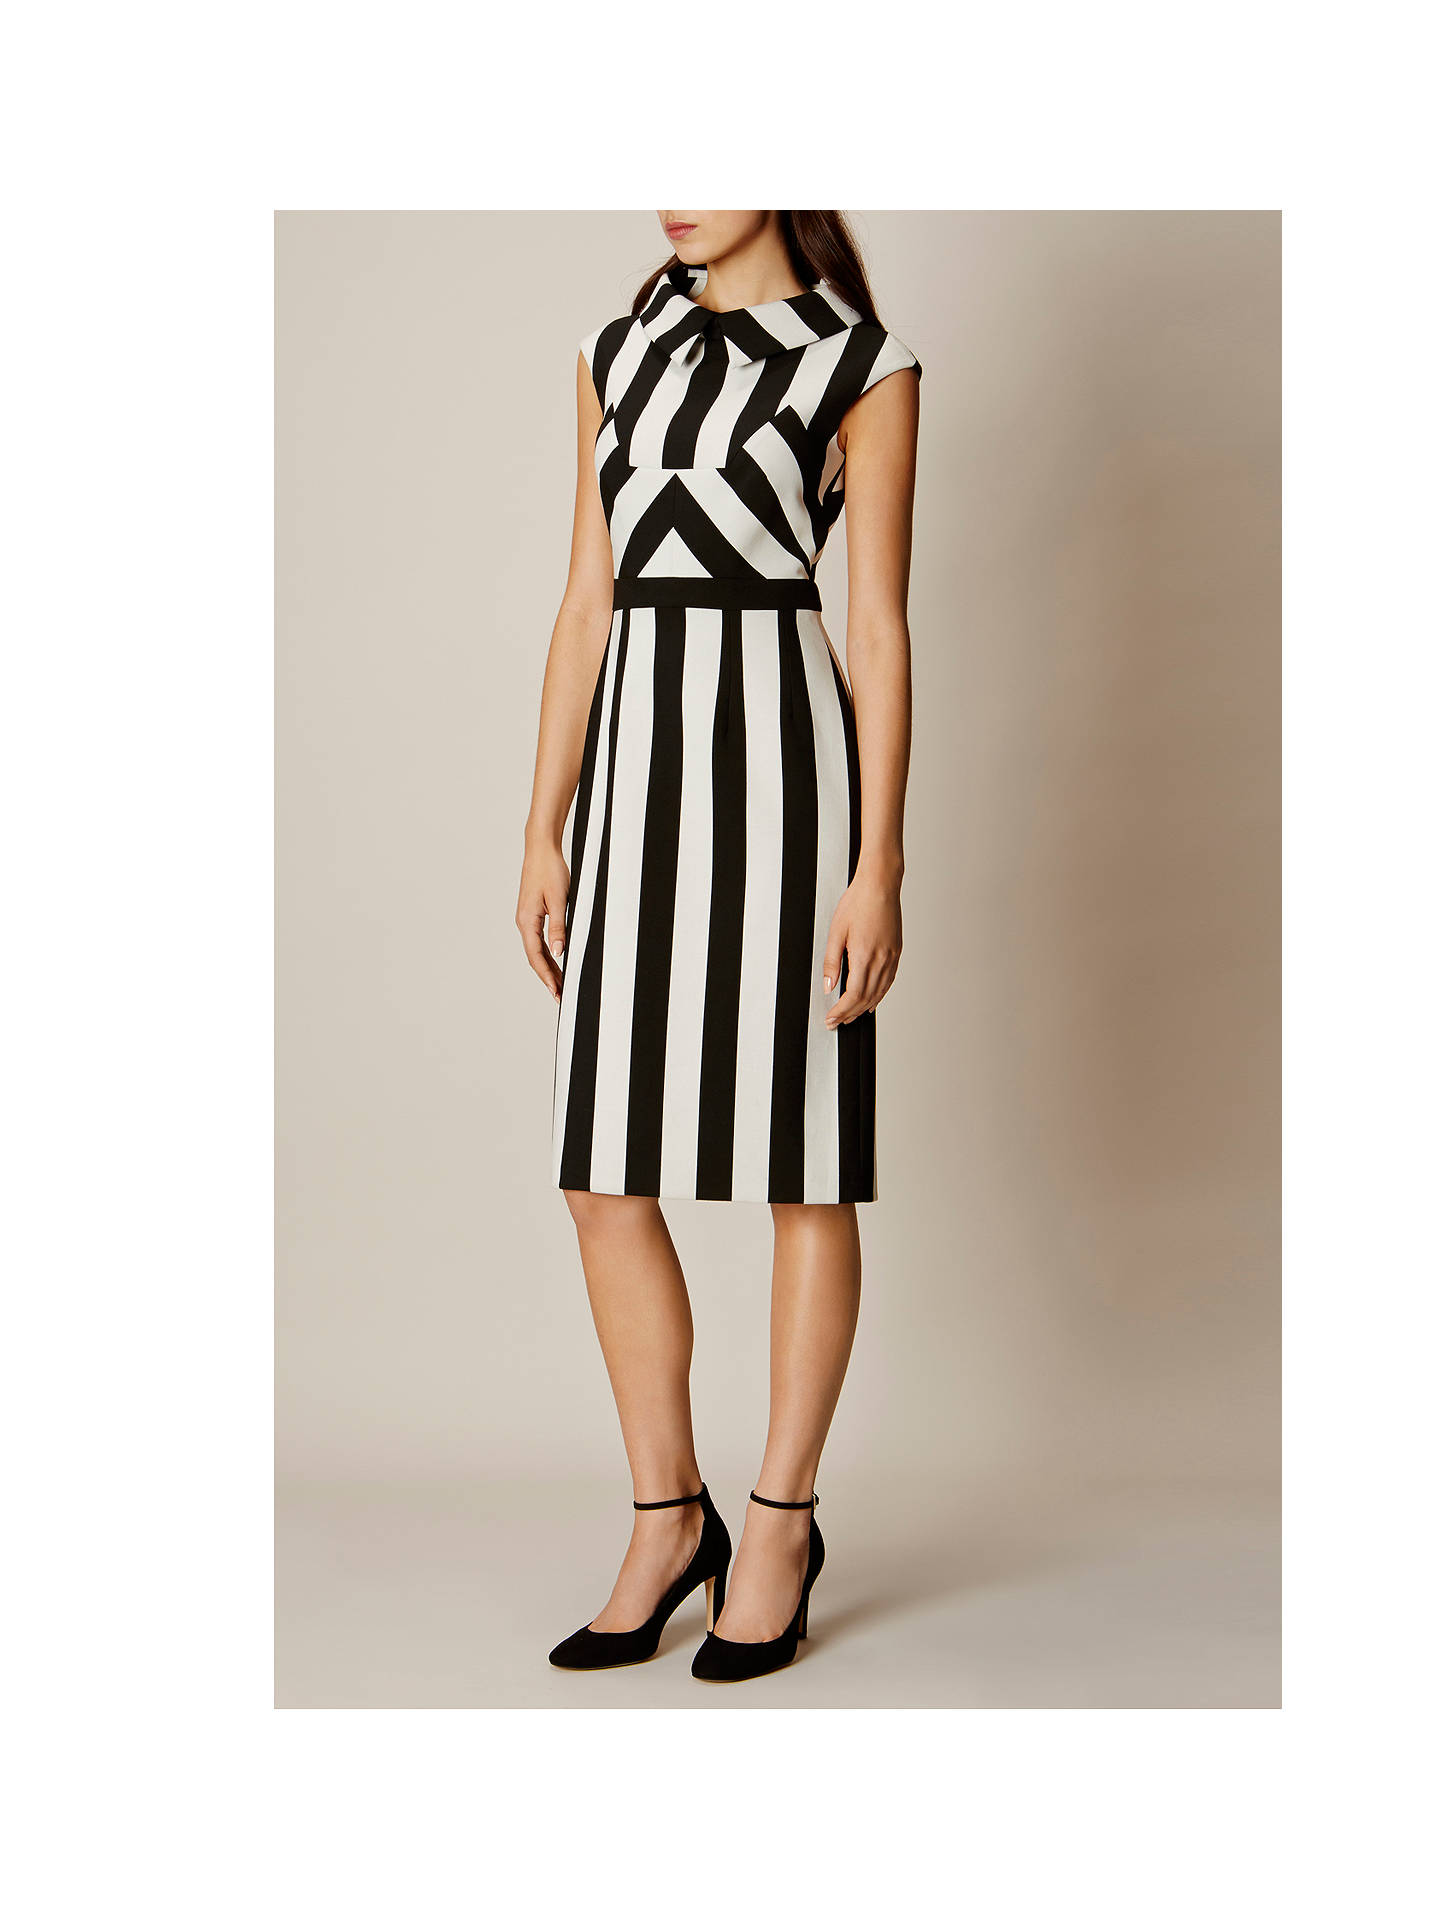 Karen Millen Multi Stripe Dress, Black/White at John Lewis & Partners